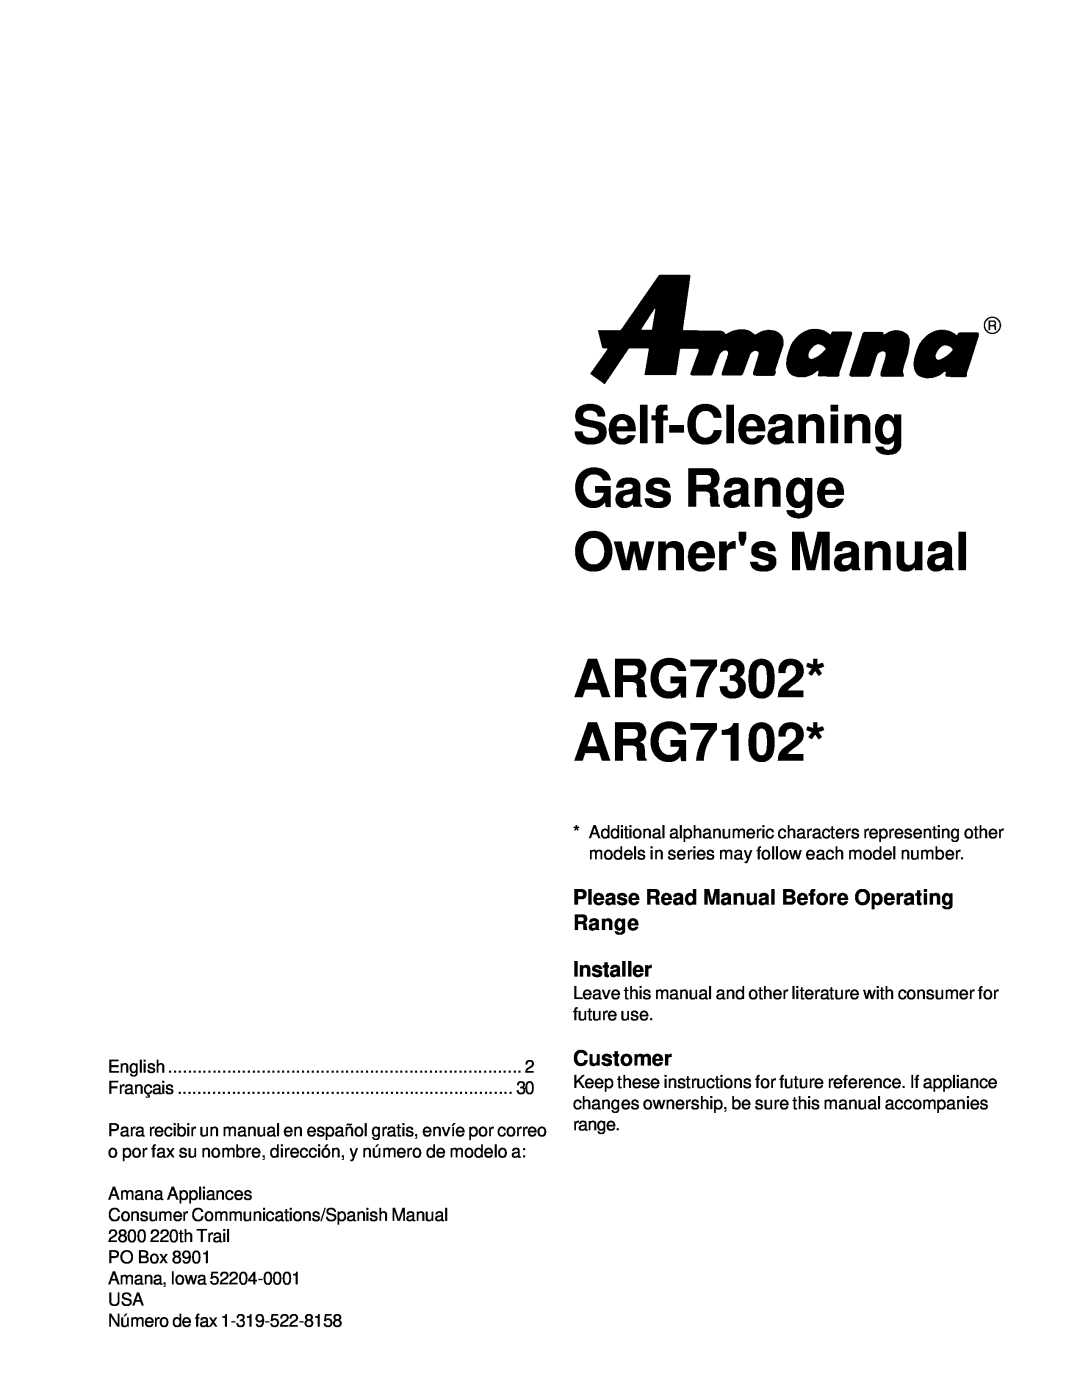 Amana ARG7302 manual Please Read Manual Before Operating Range Installer, Customer 